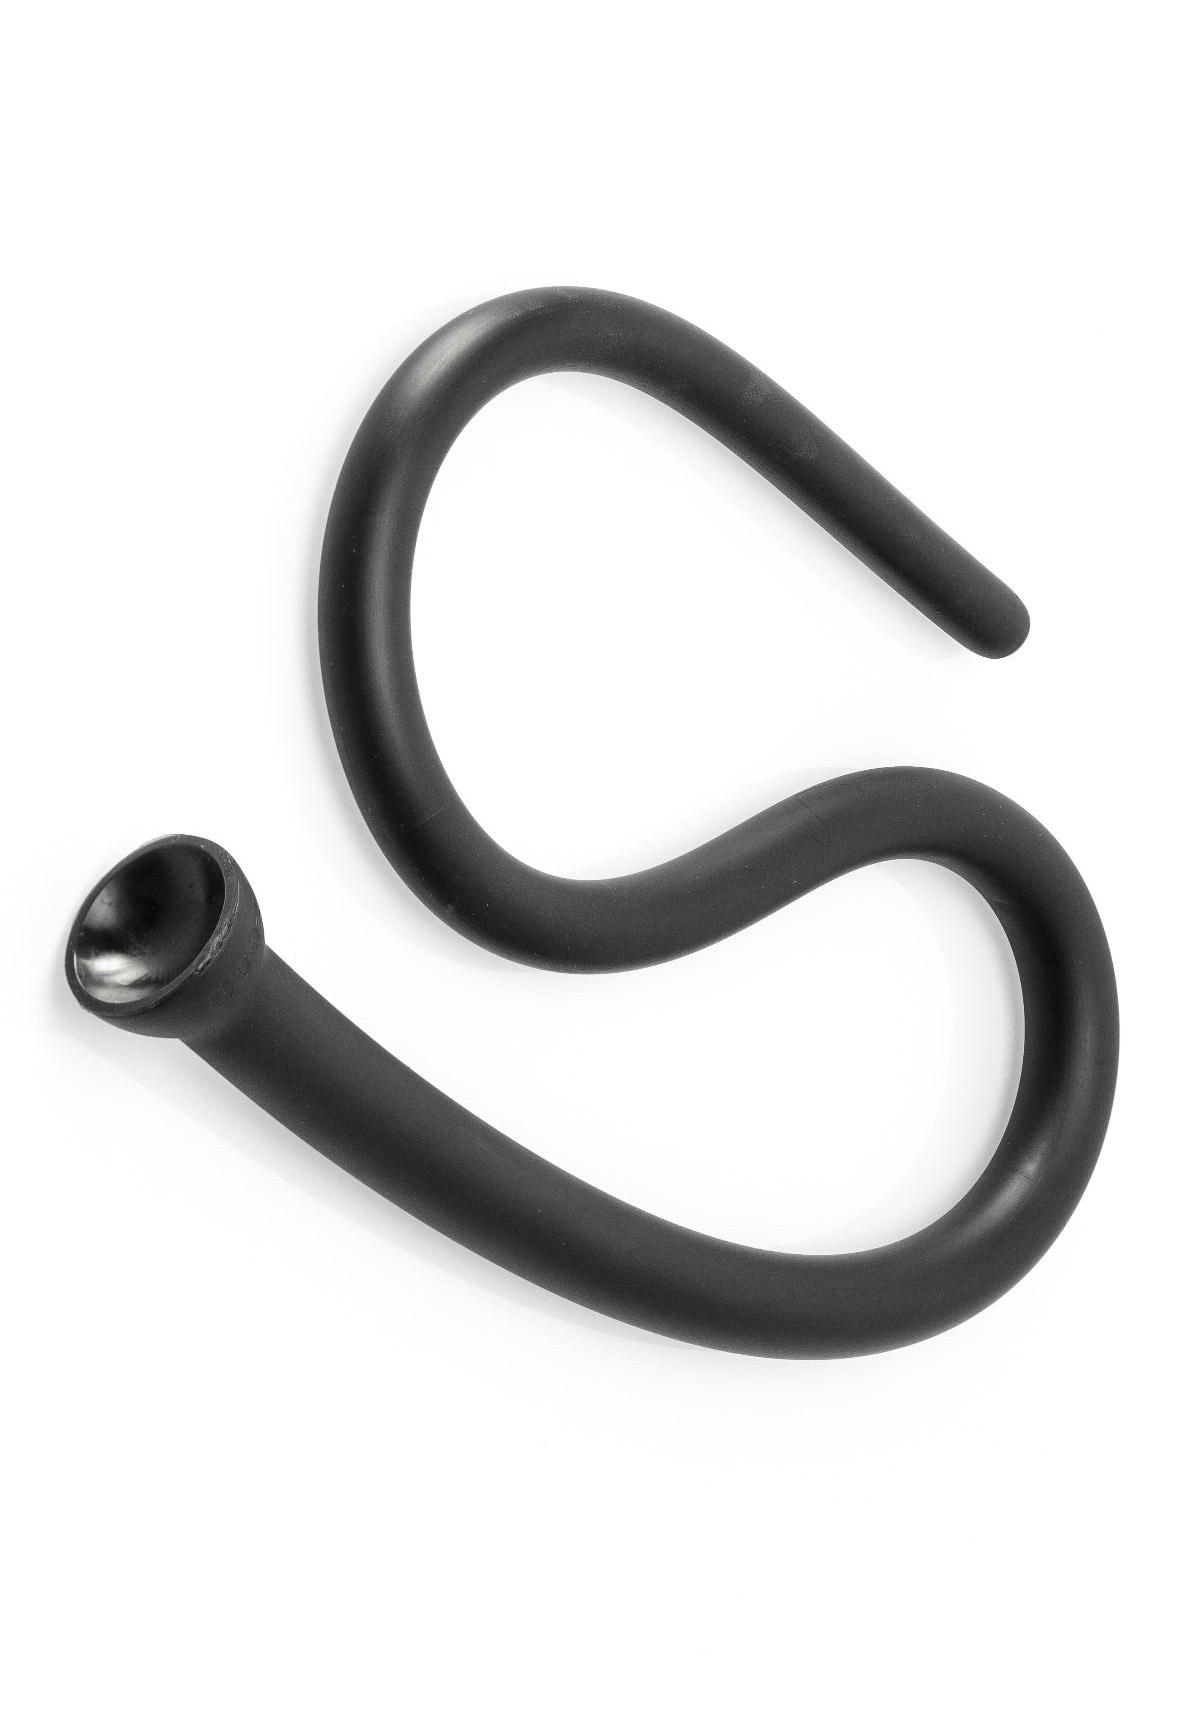 ZENN: Silicone Snake 87 cm | Black